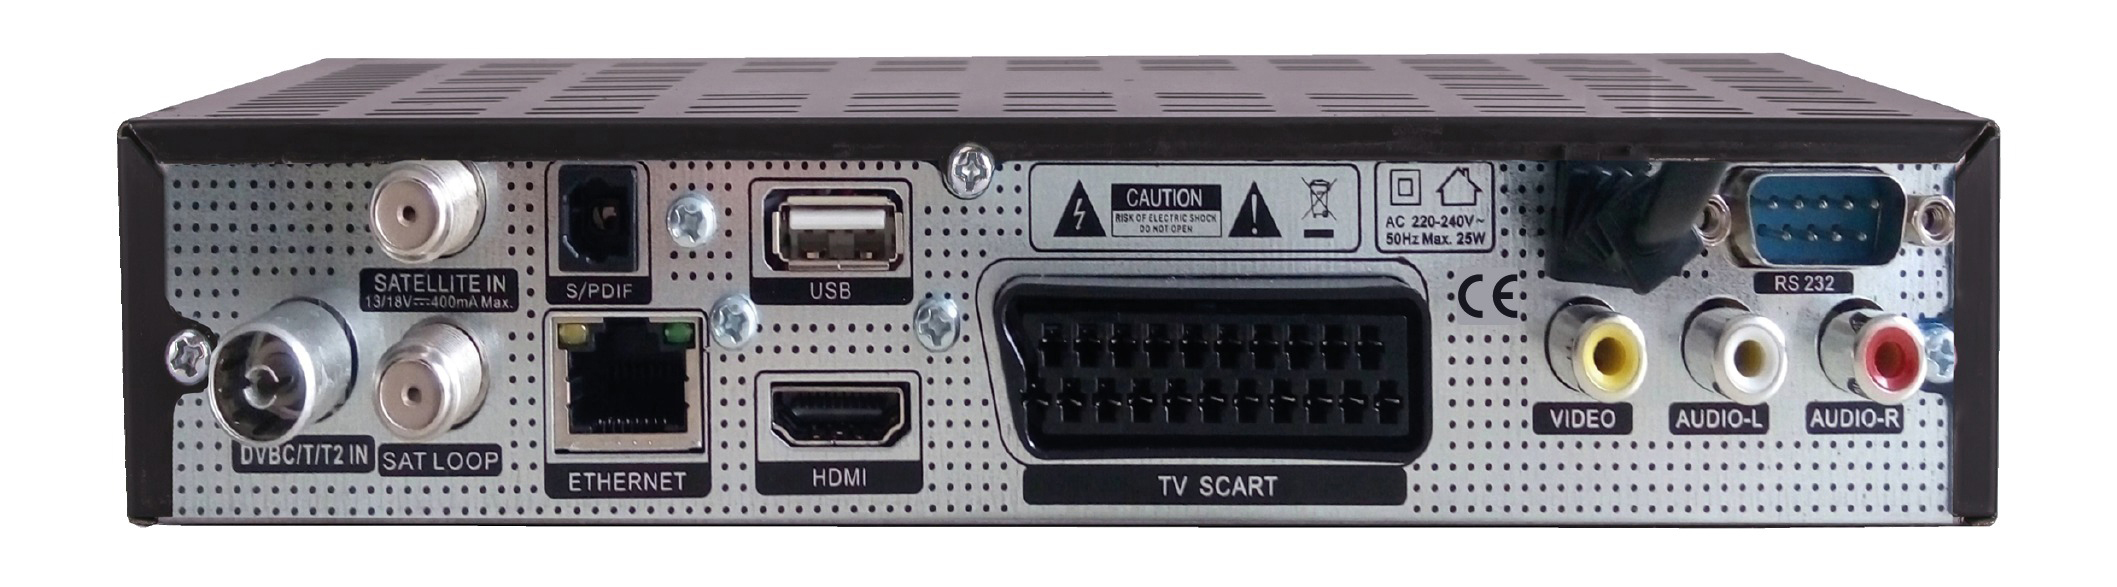 OPTICUM RED Sloth Combo Receiver DVB-T2 Twin HD, DVB-S, Schwarz) (HDTV, PVR Combo DVB-S2, PVR-Funktion, Plus DVB-C, DVB-C2, Tuner